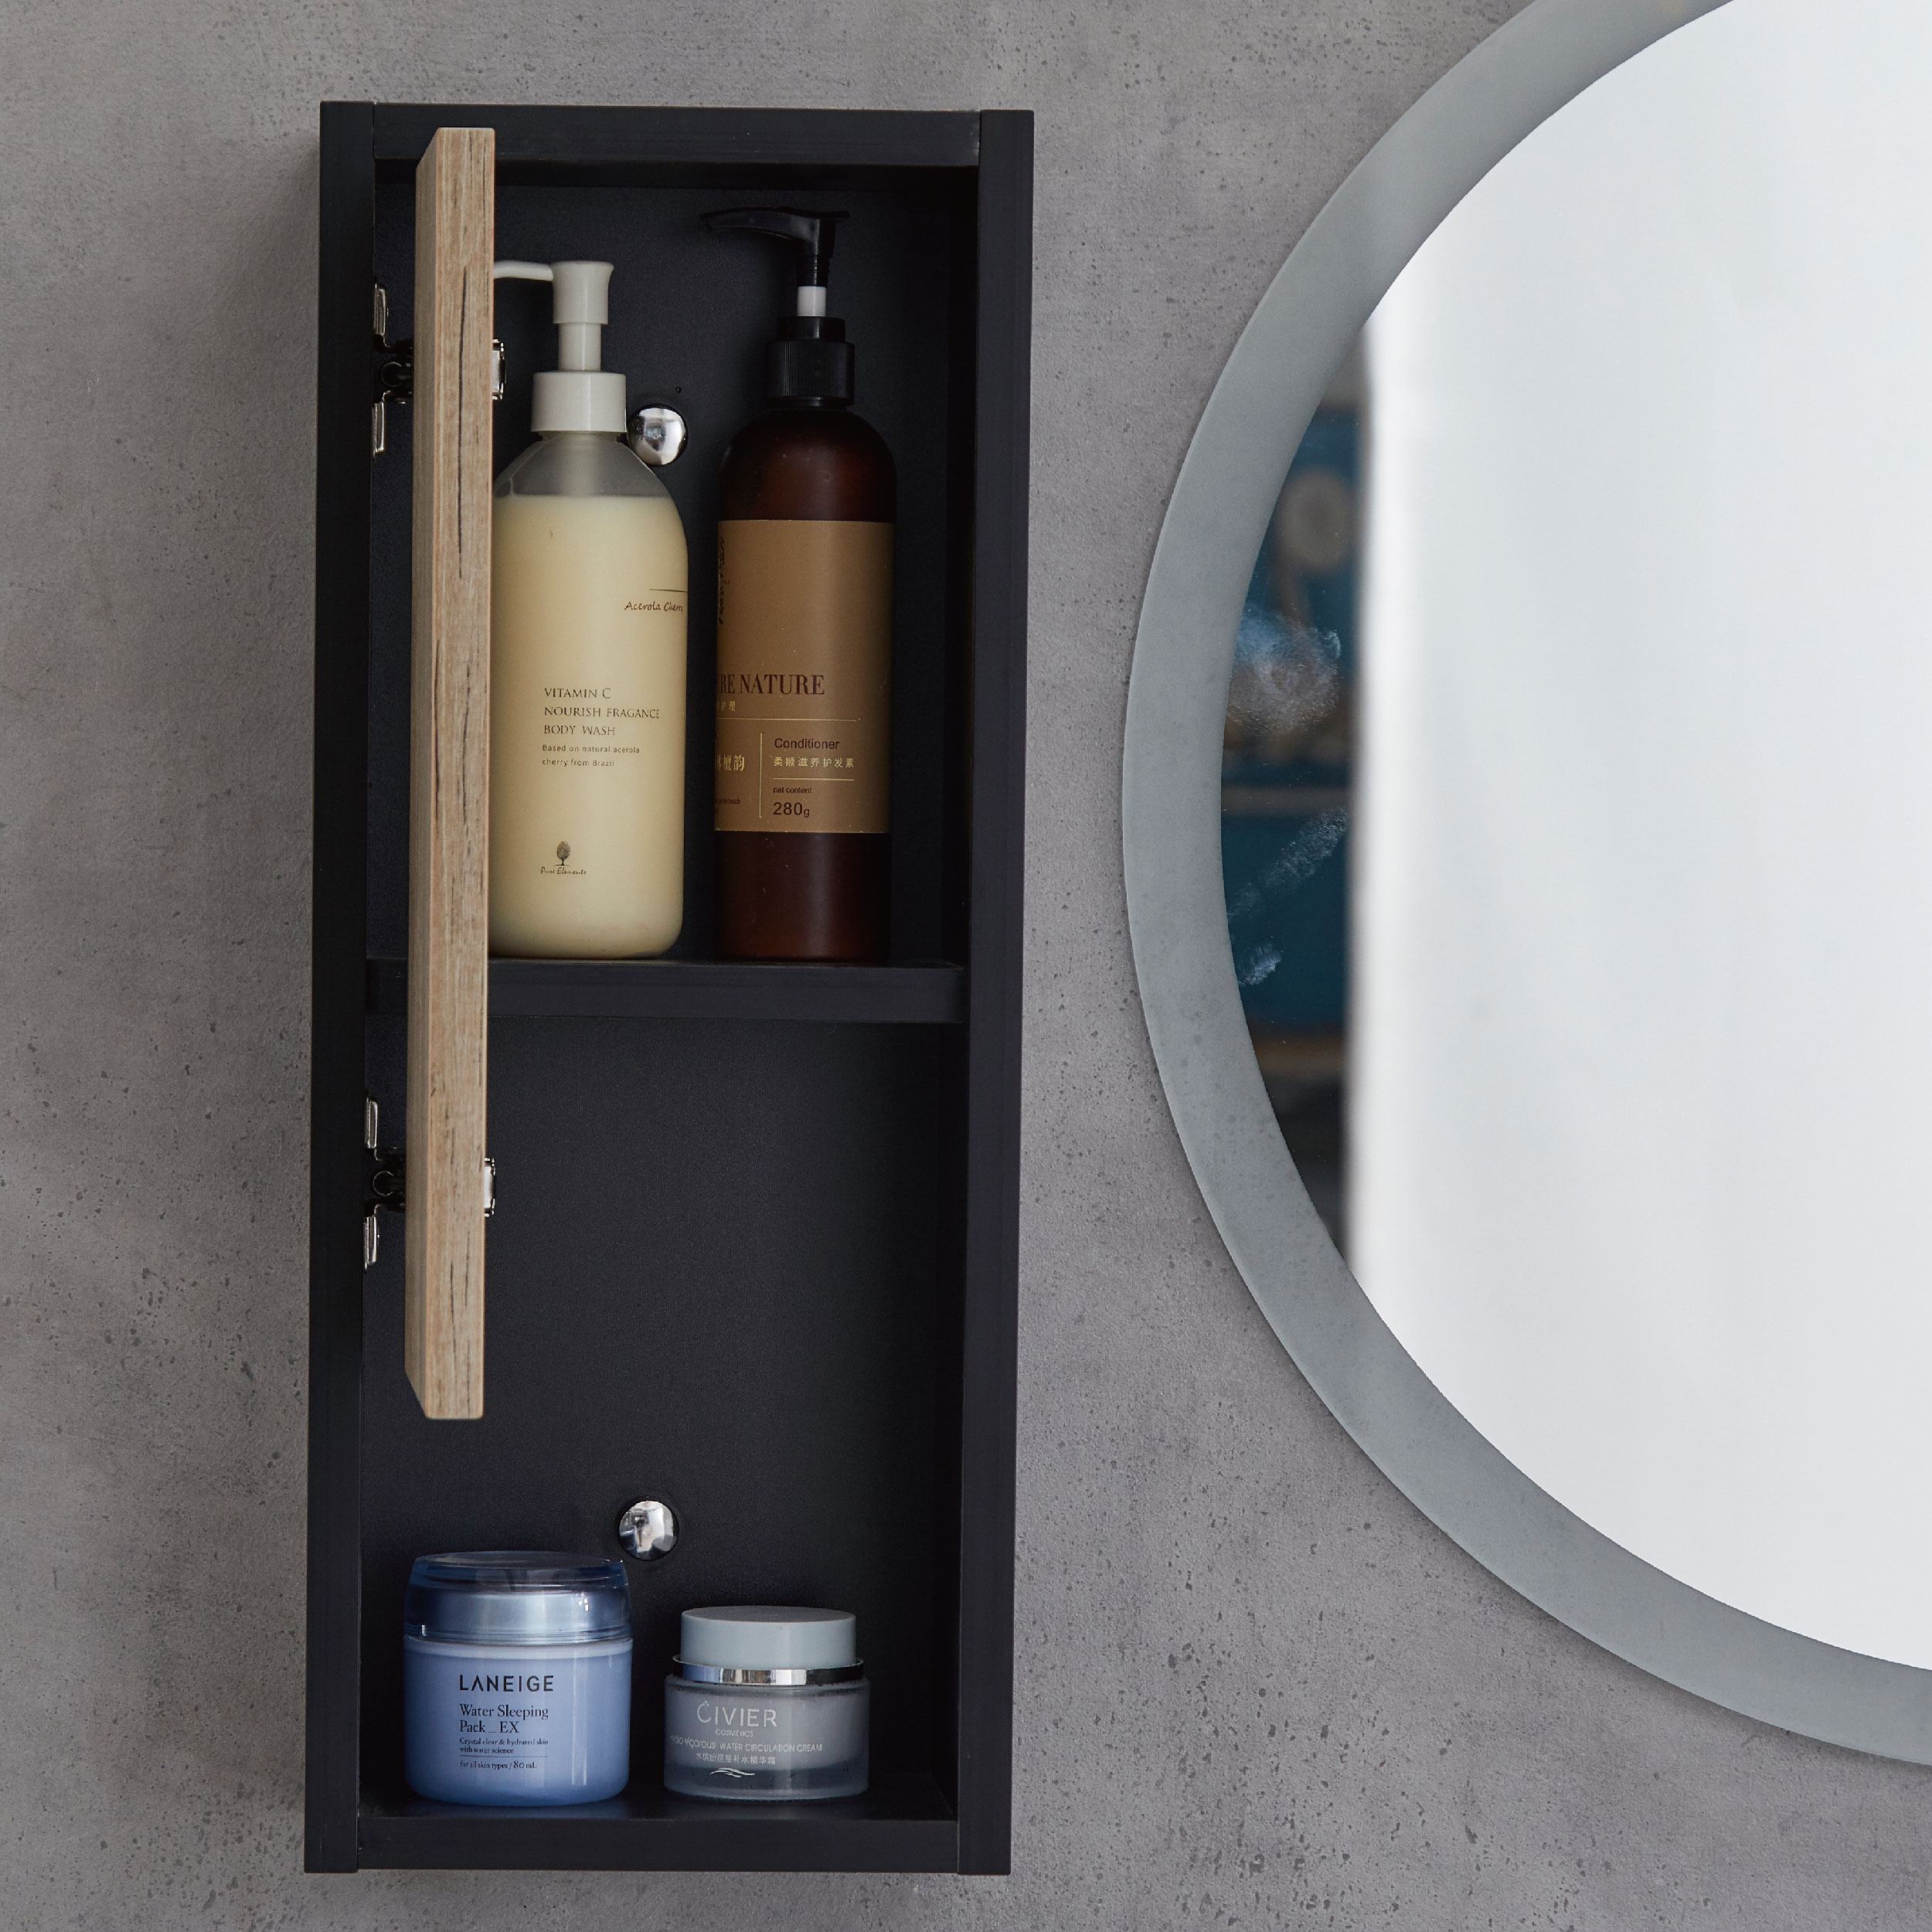 Bathroom Cabinets Wall Mounted Vanity With Black Basin